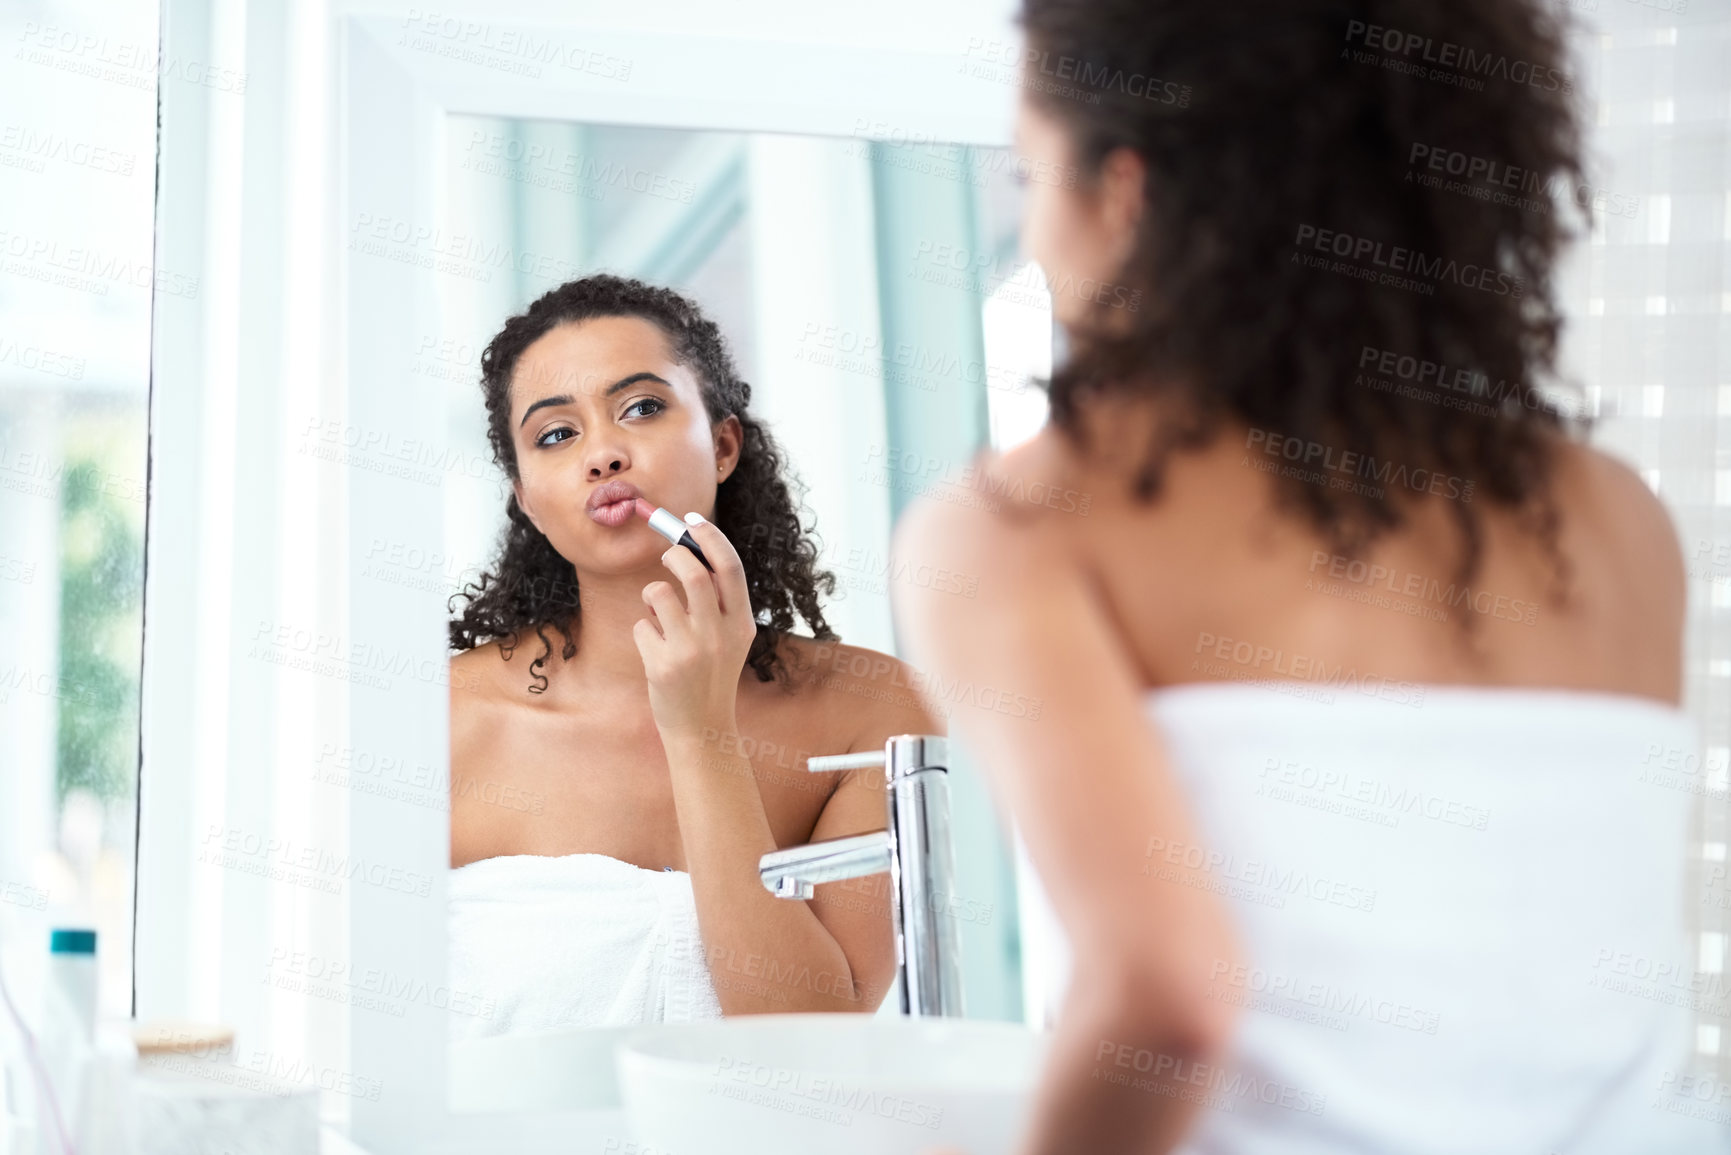 Buy stock photo Shot of a beautiful woman applying lipstick in her bathroom mirror